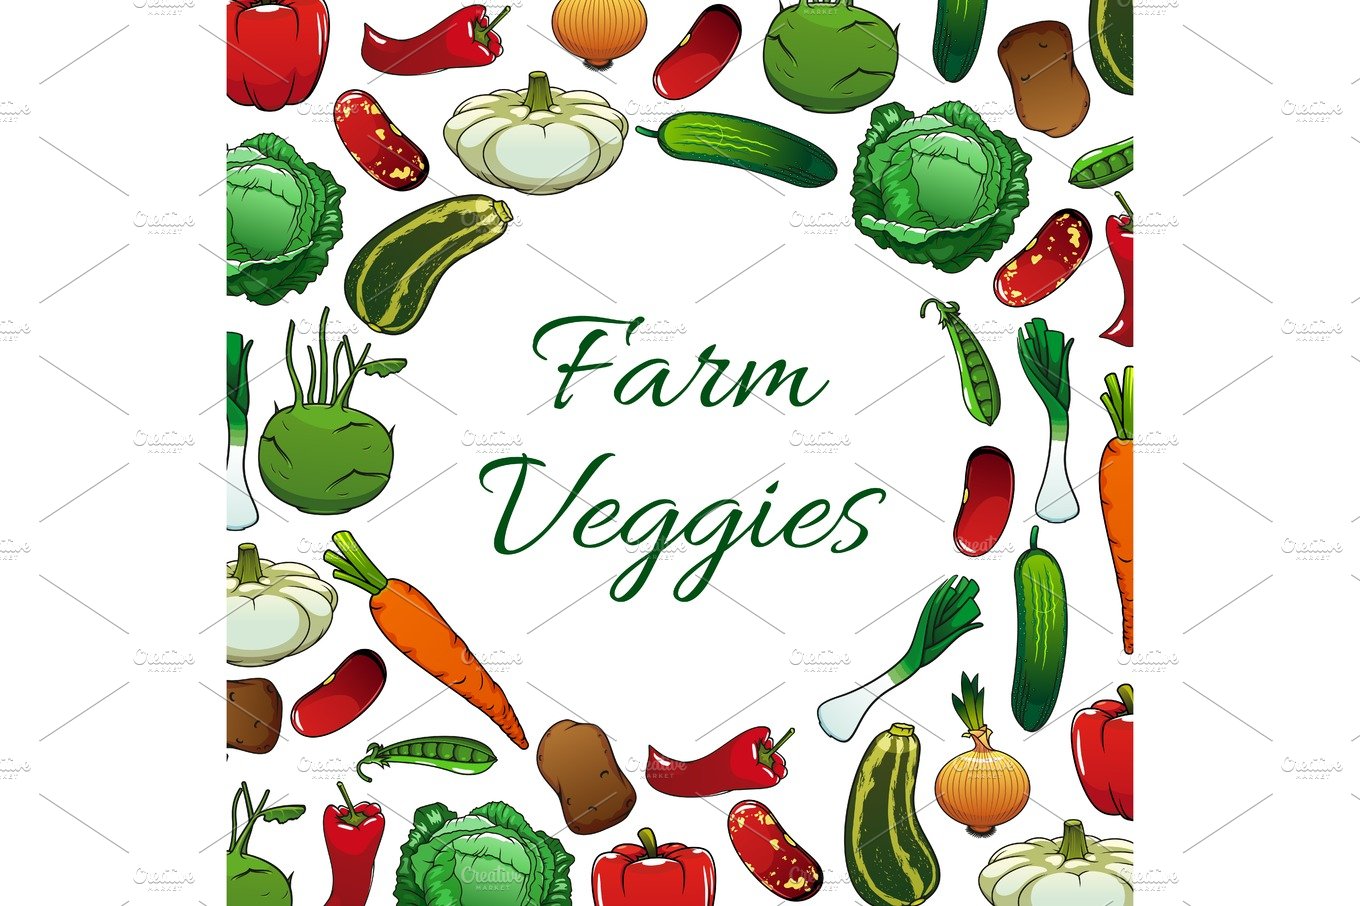 Farm vegetables poster, vegetarian food background cover image.